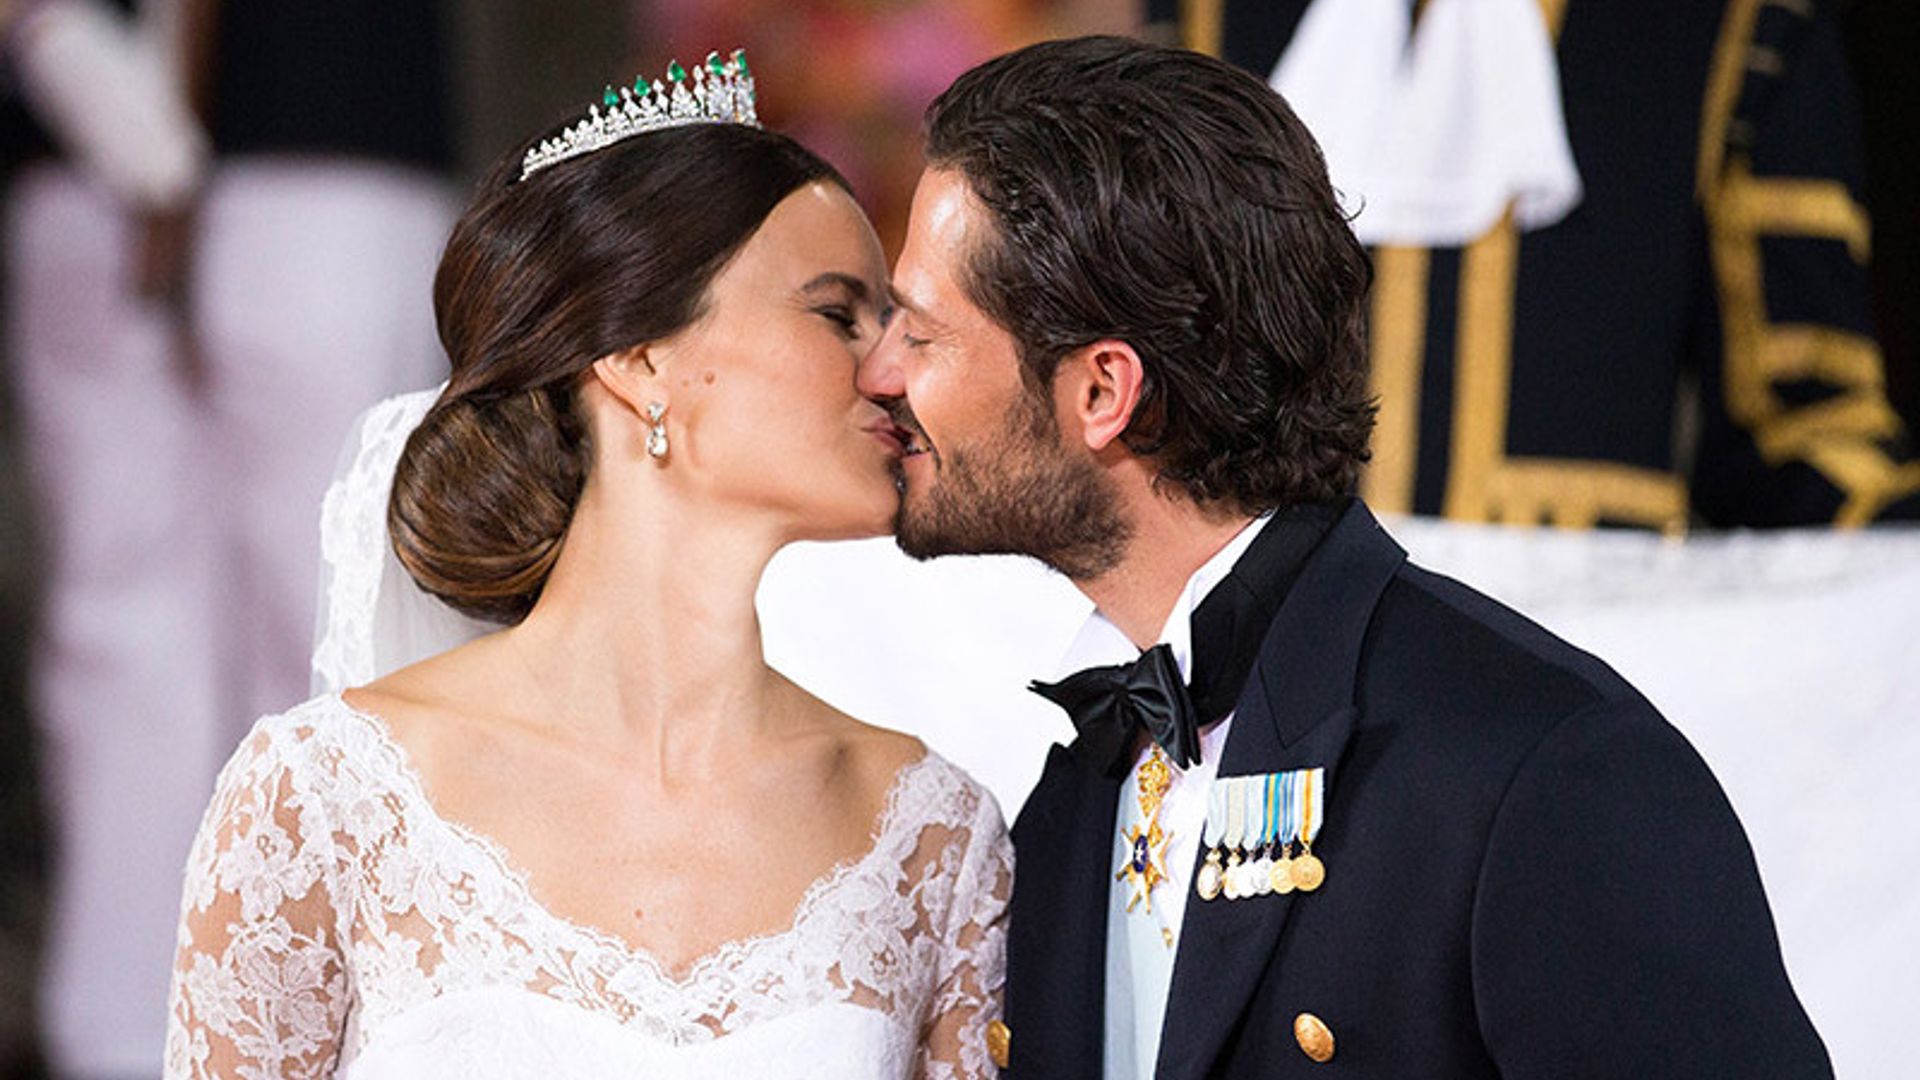 Swedish royal wedding: Prince Carl-Philip, Sofia Hellqvist's fairytale ceremony